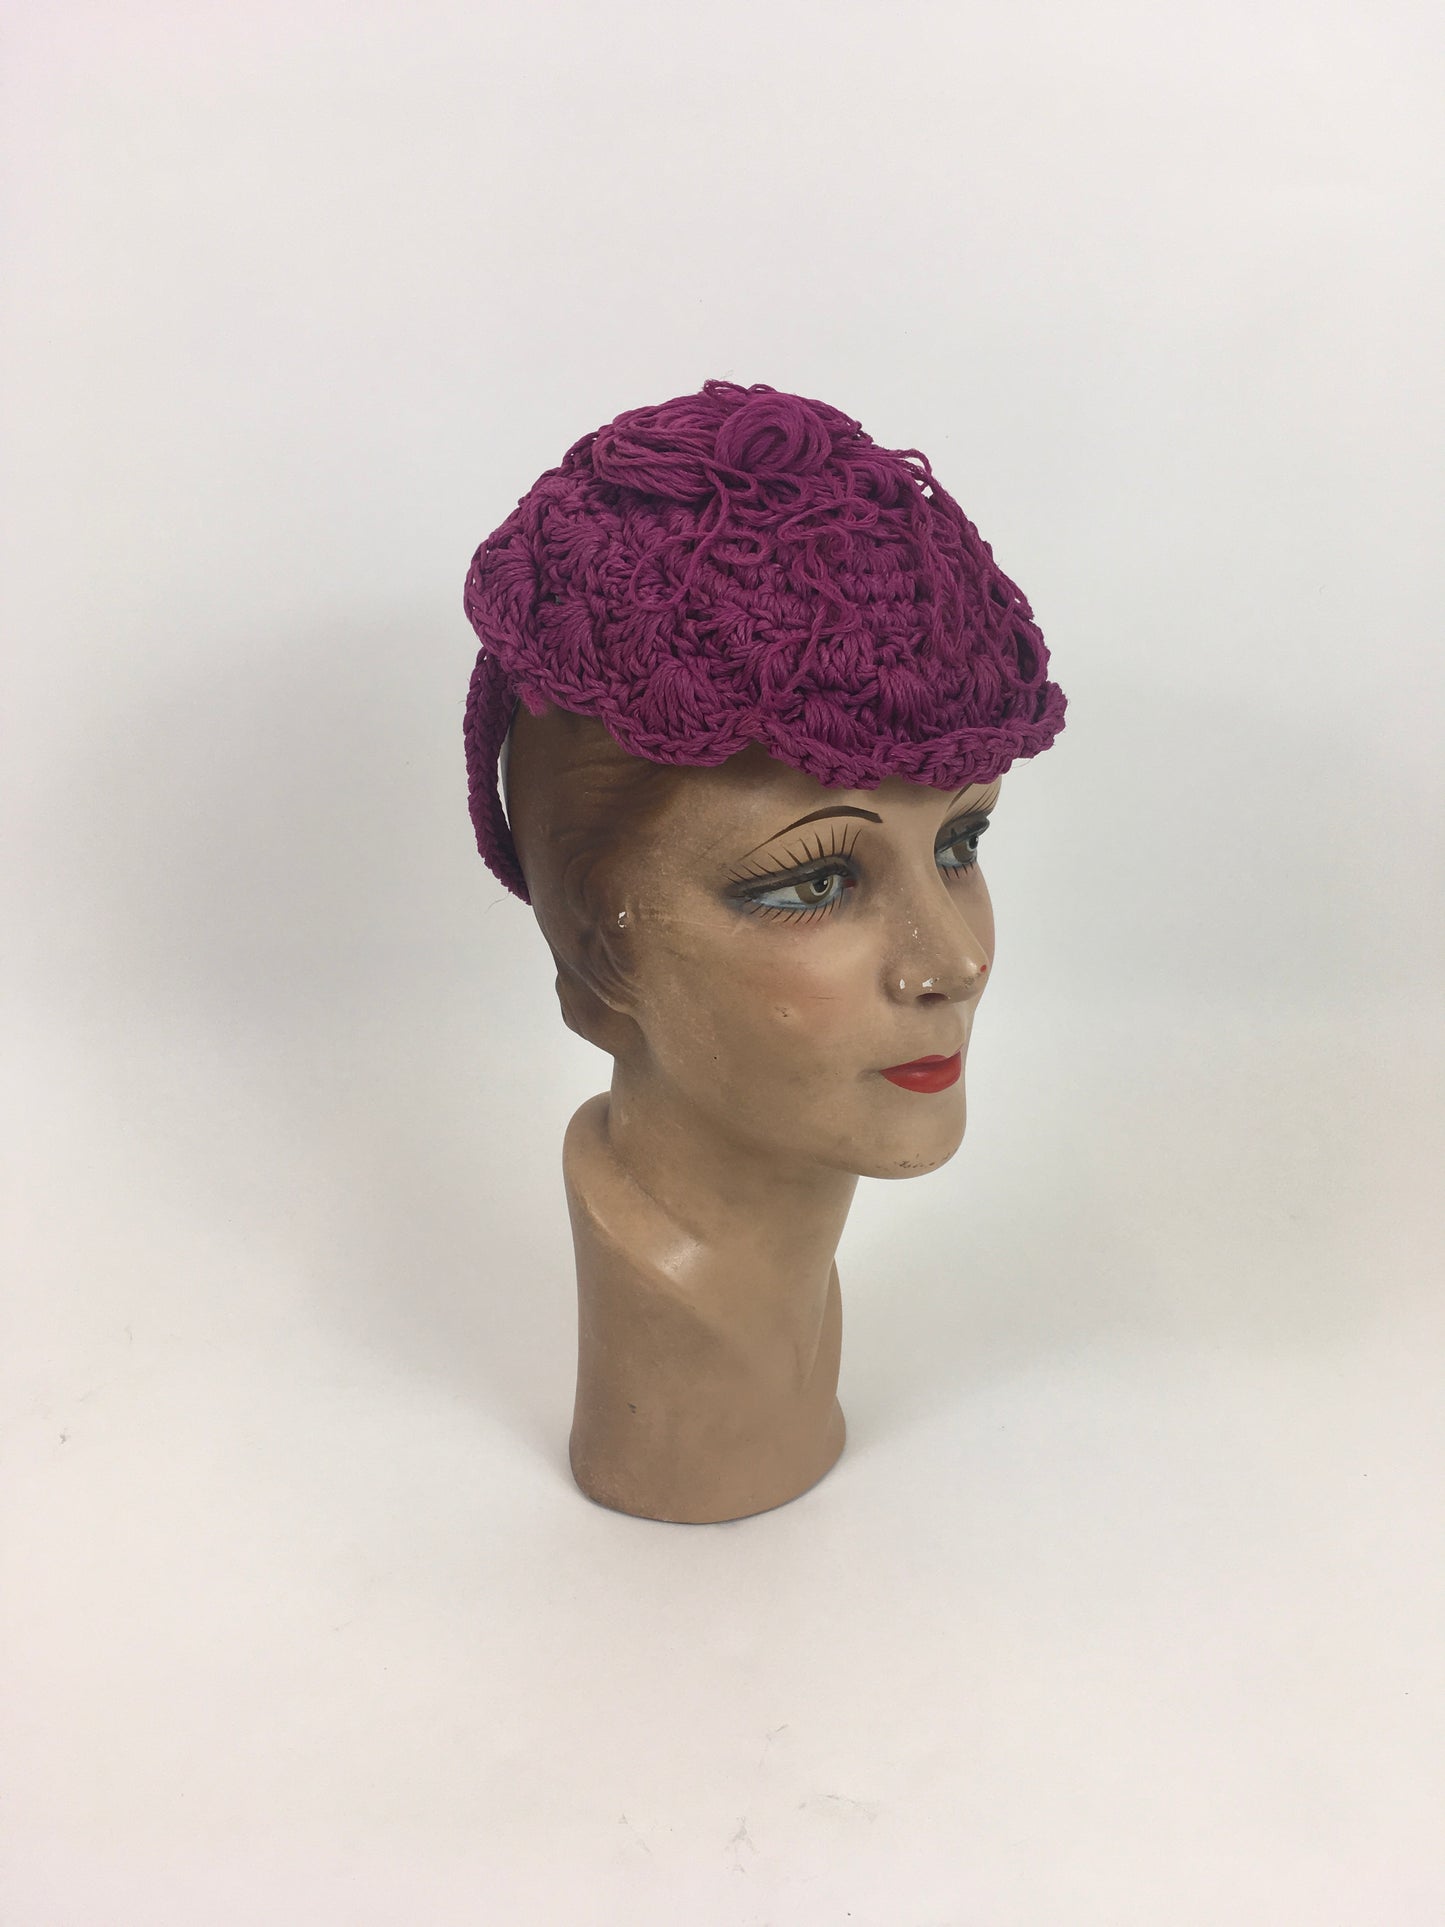 Original 1940’s Fabulous Popcorn Crochet Headpiece - In A Bright Fuchsia Pink